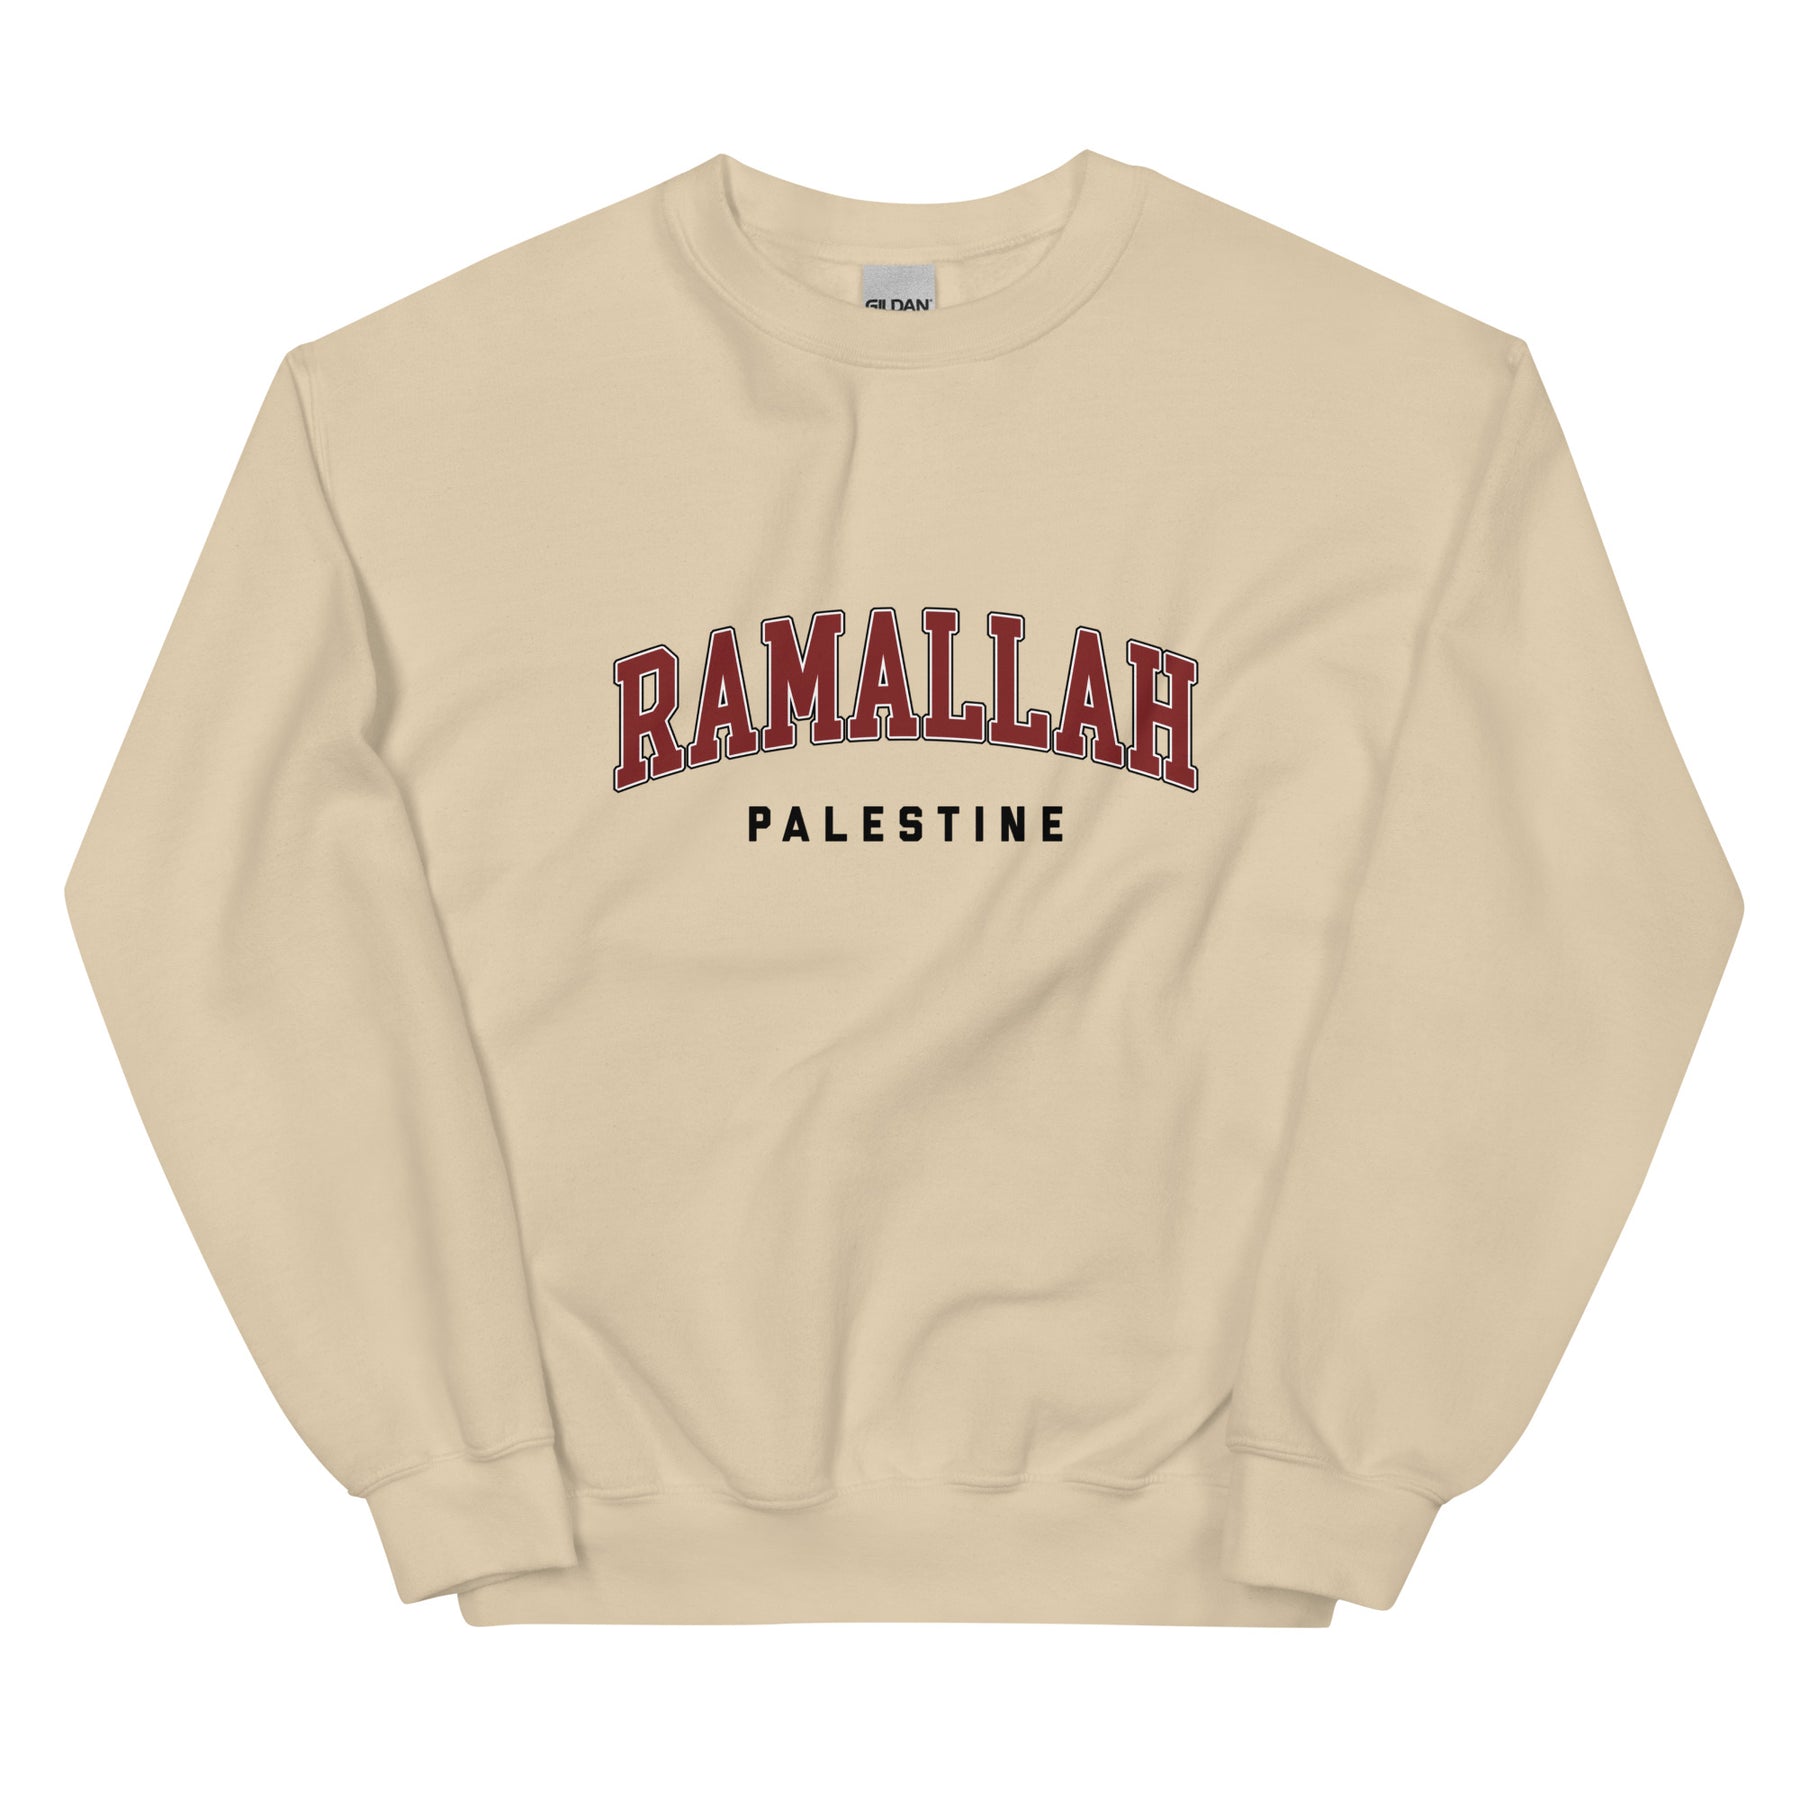 Ramallah, Palestine - Sweatshirt